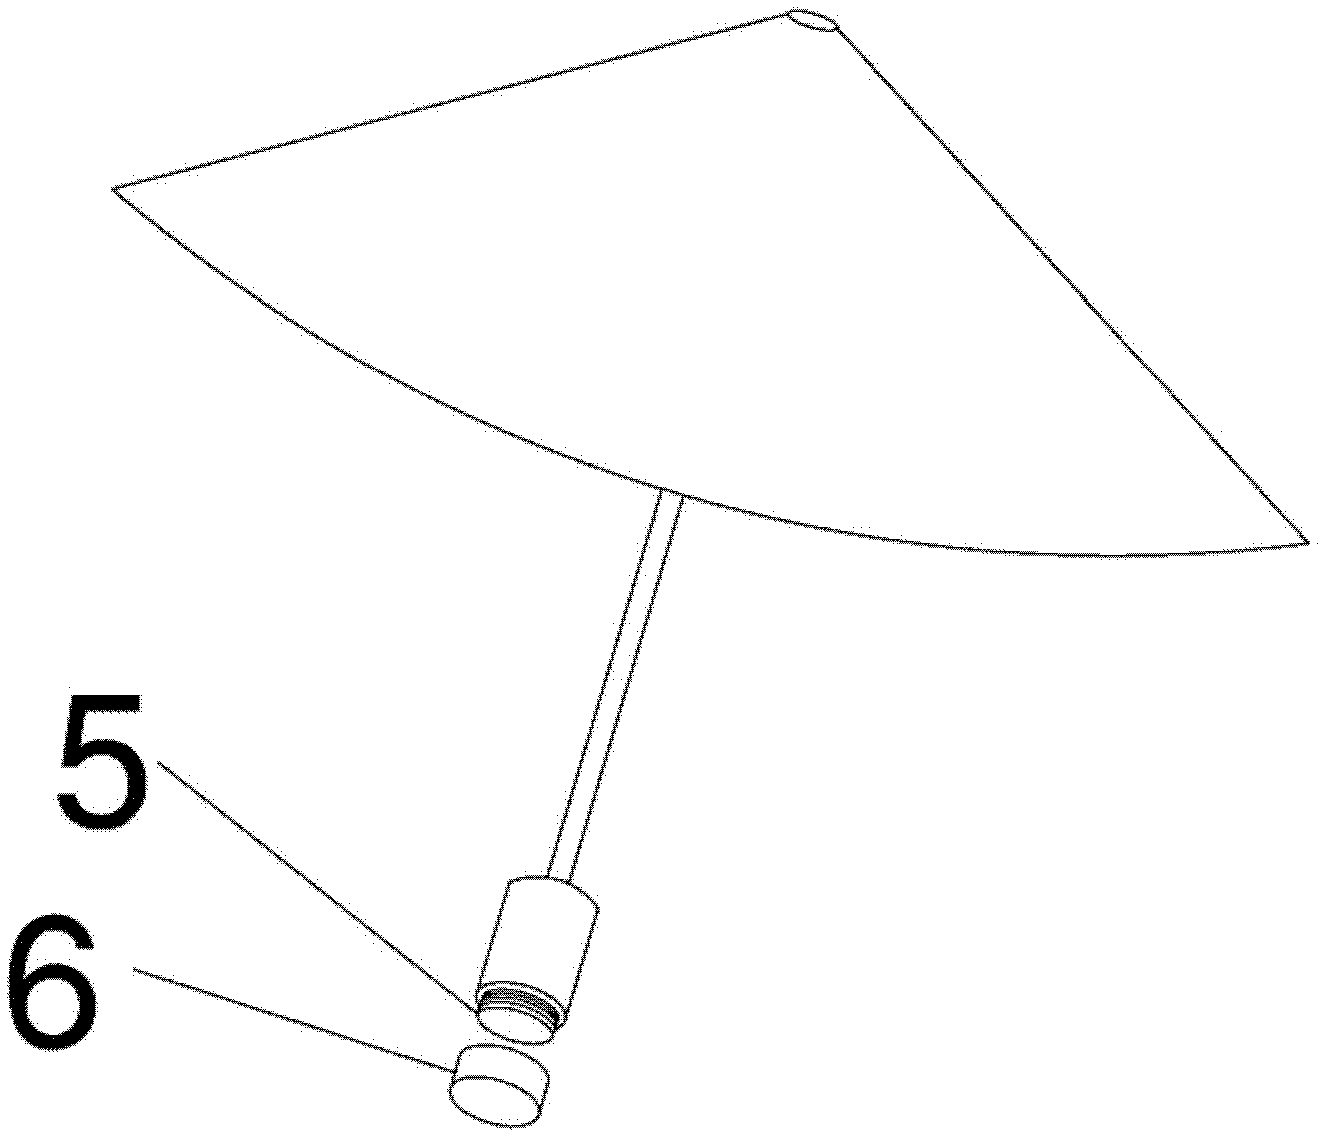 Umbrella cover structure for folding umbrella